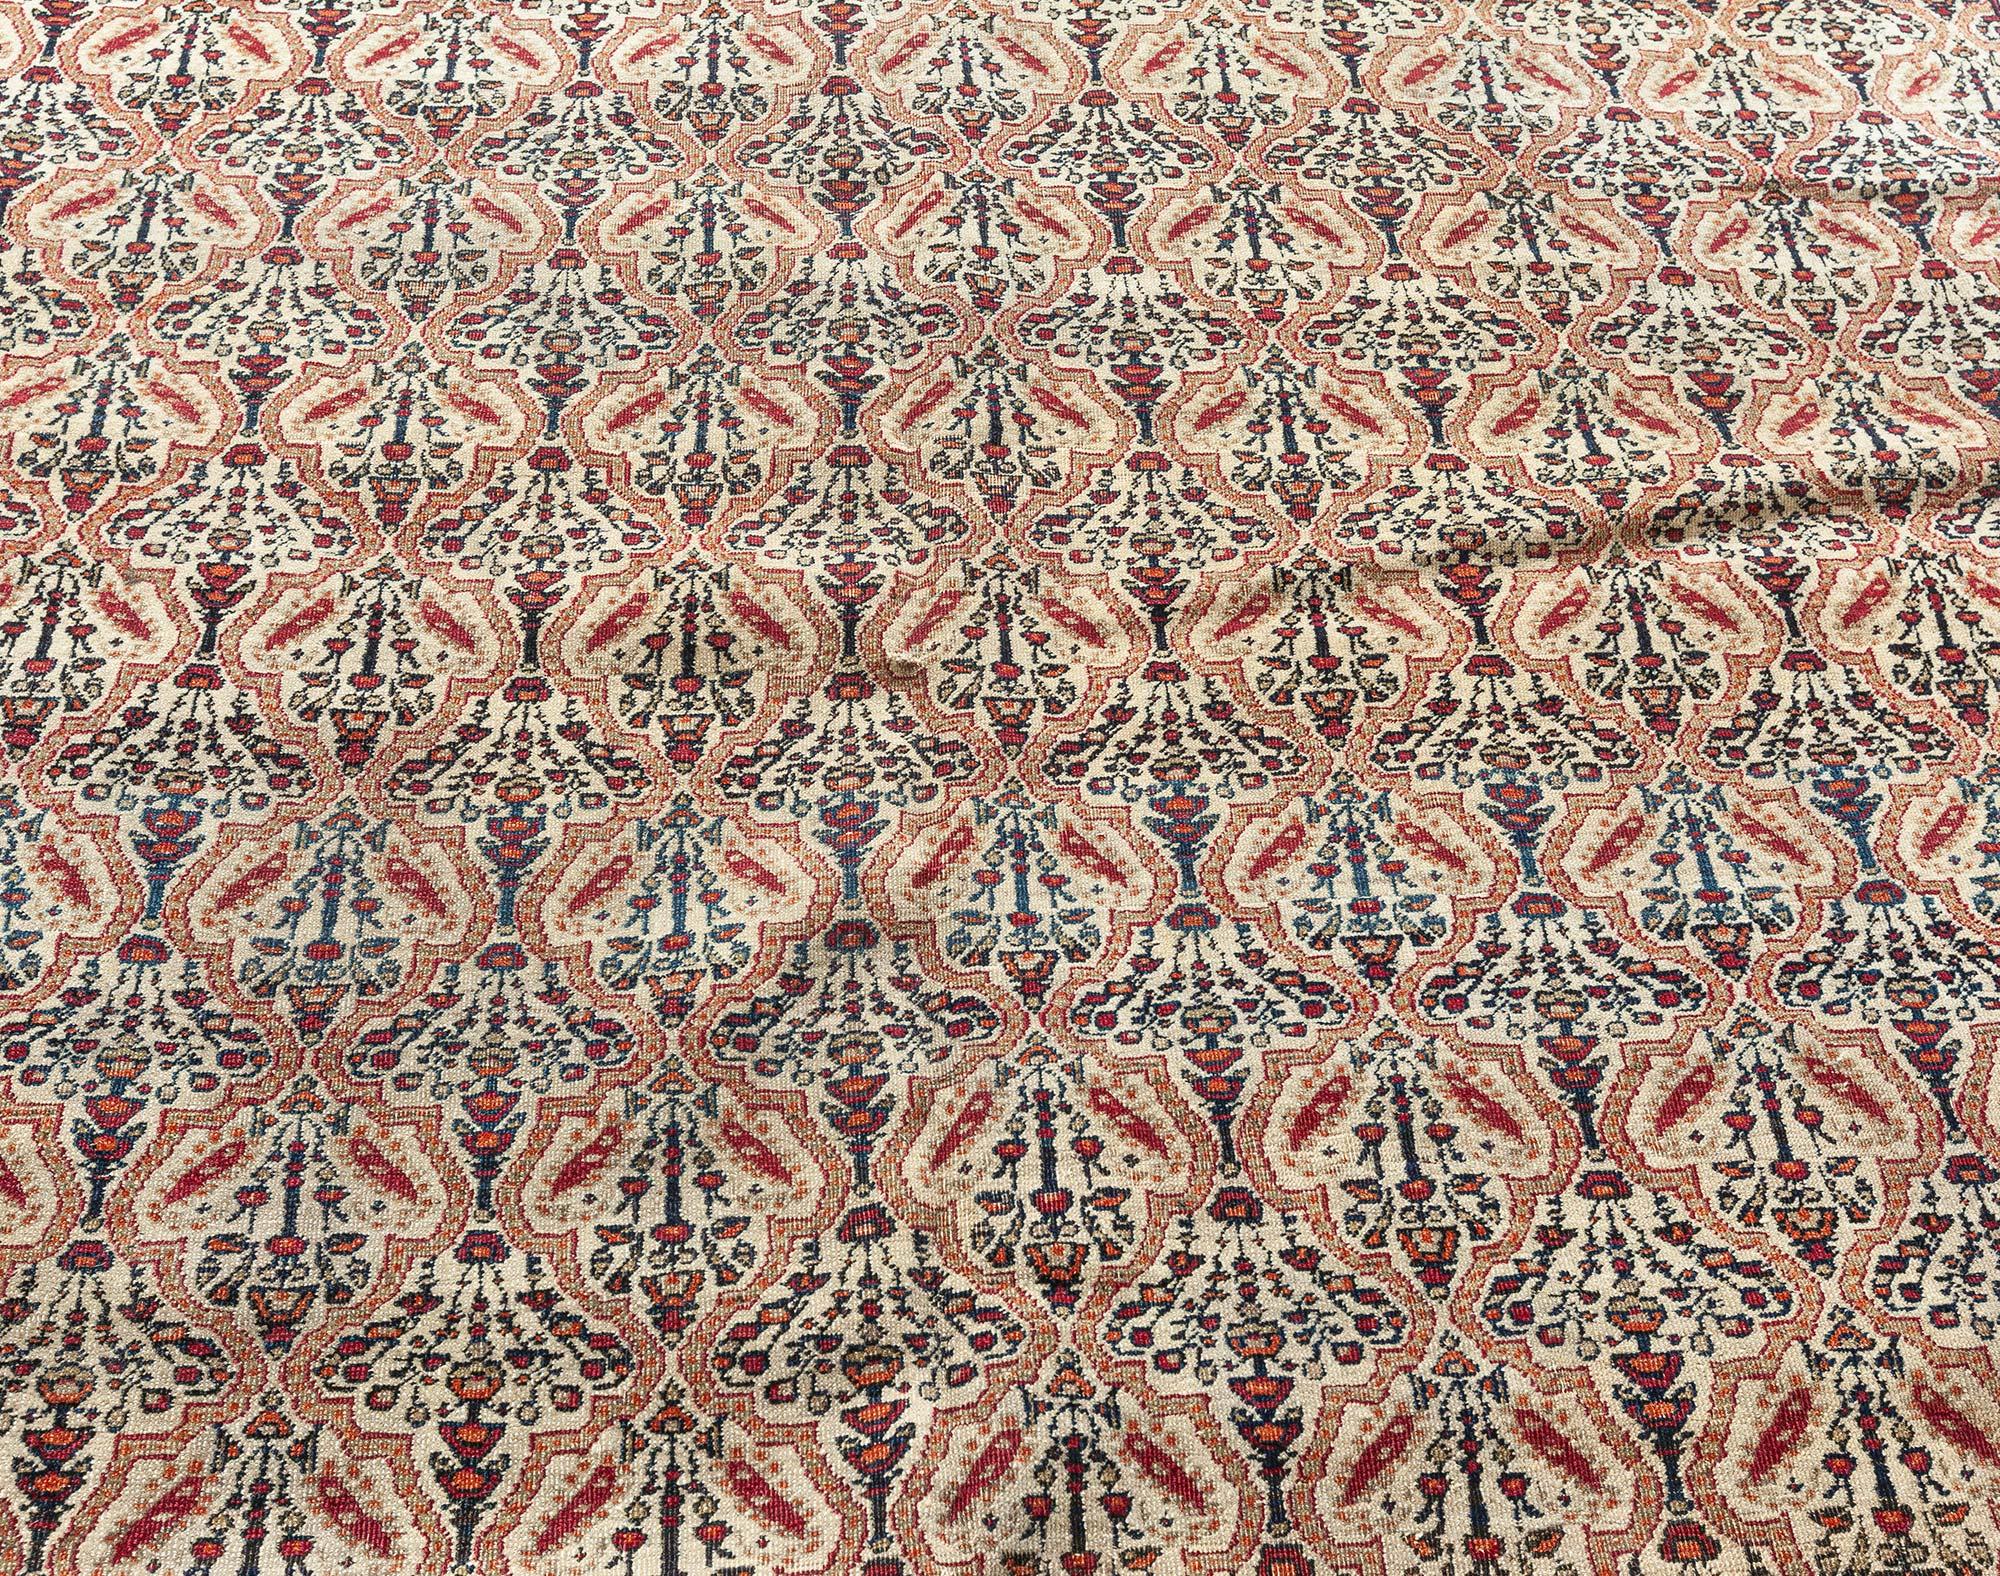 19th century Persian Kirman botanic red, green and beige handwoven wool rug
Size: 4'0